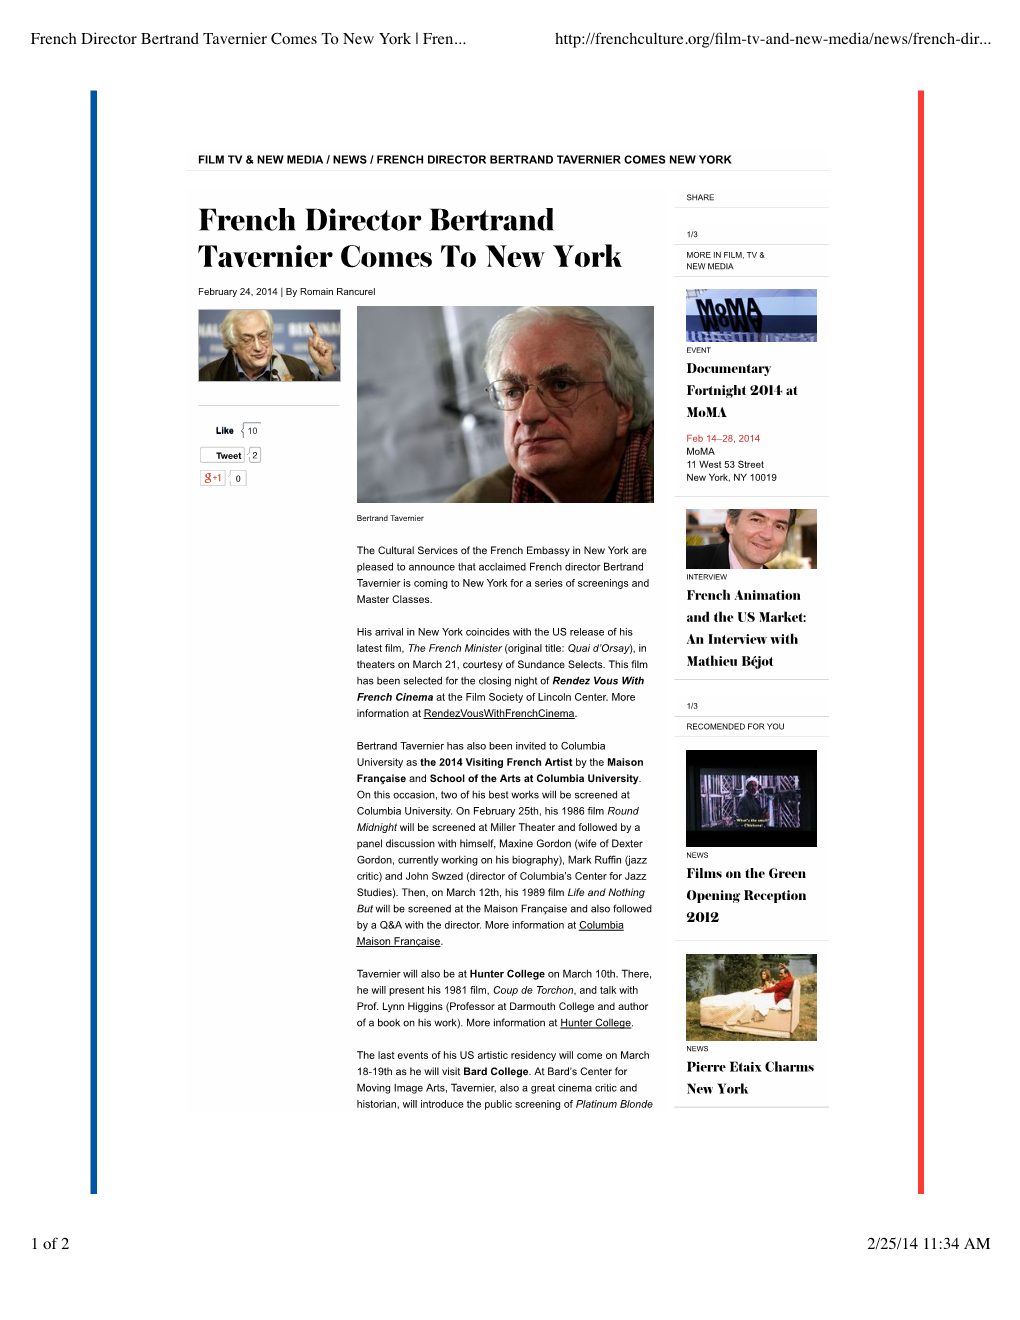 French Director Bertrand Tavernier Comes to New York | Fren